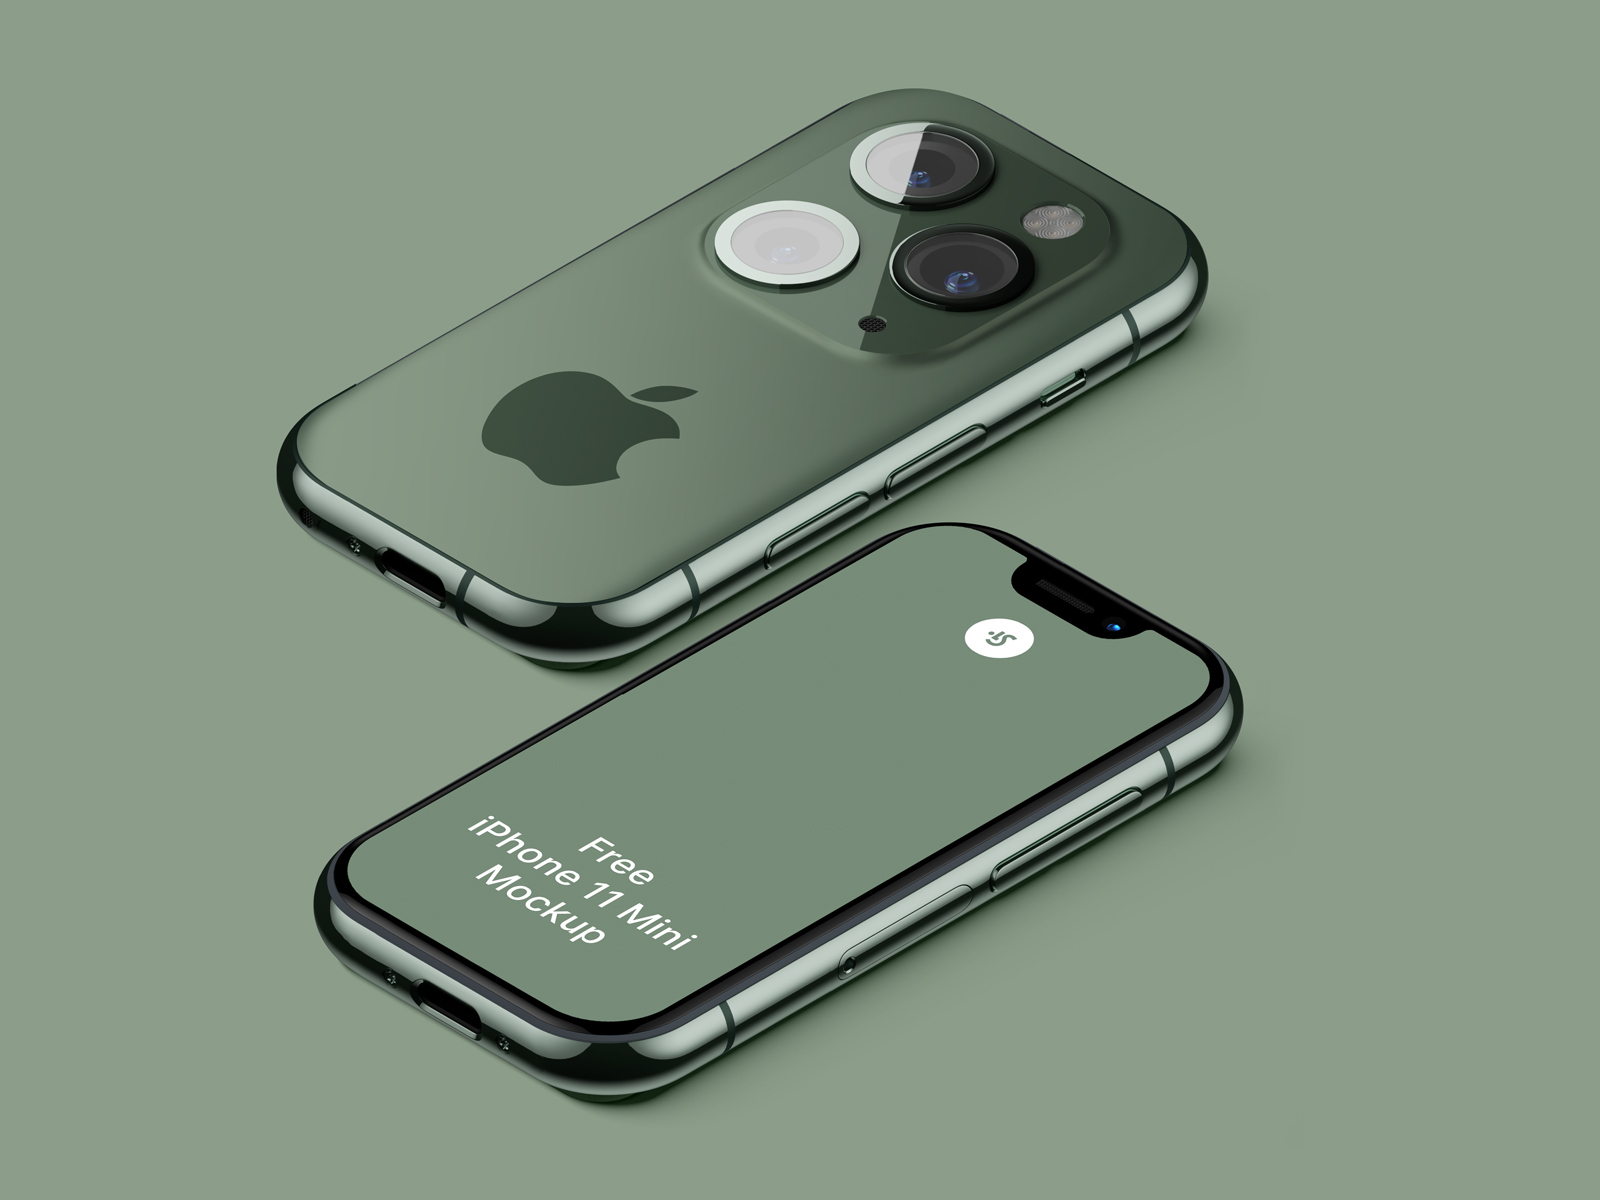 iPhone 11 Mini Leak by Ruslanlatypov for ls.graphics on Dribbble